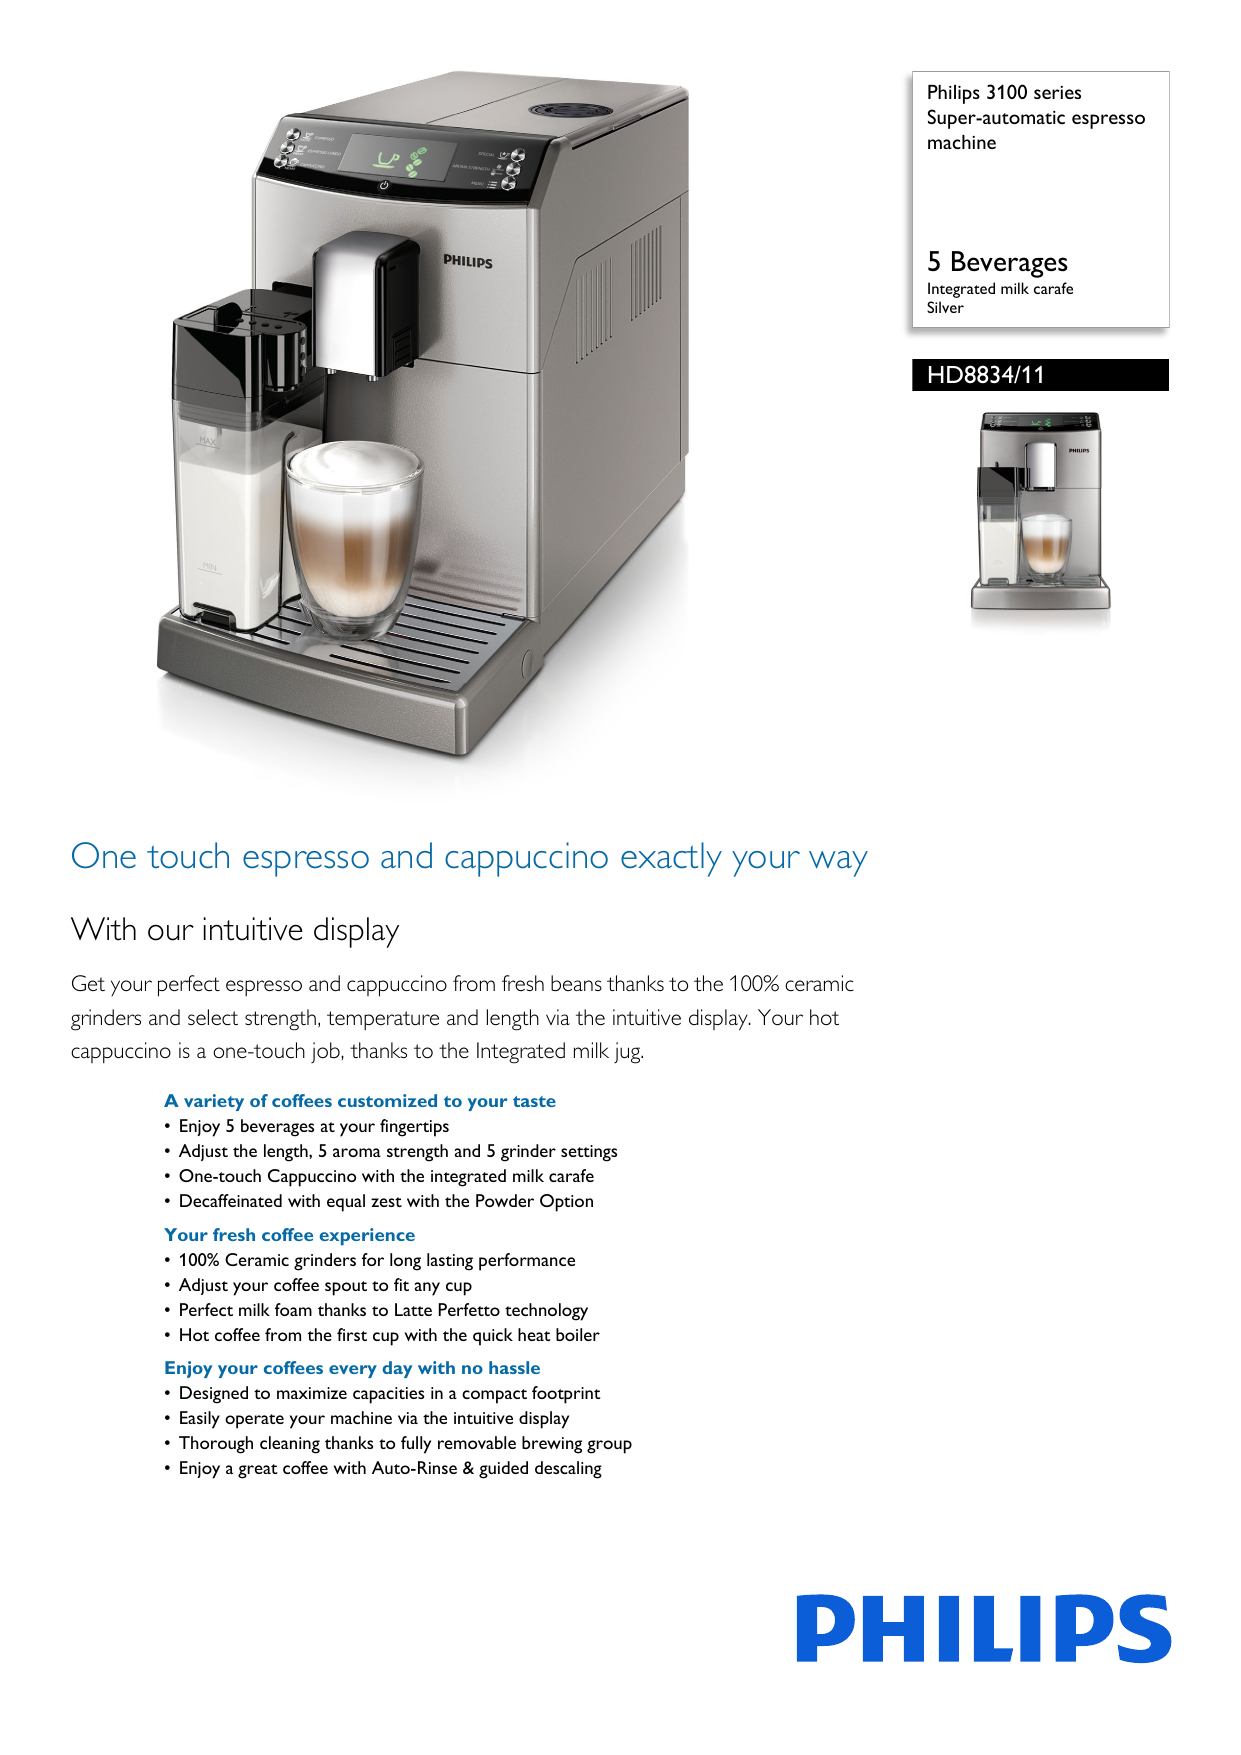 microwave Hurry up Neuropathy HD8834/11 Philips Super-automatic espresso machine | Manualzz